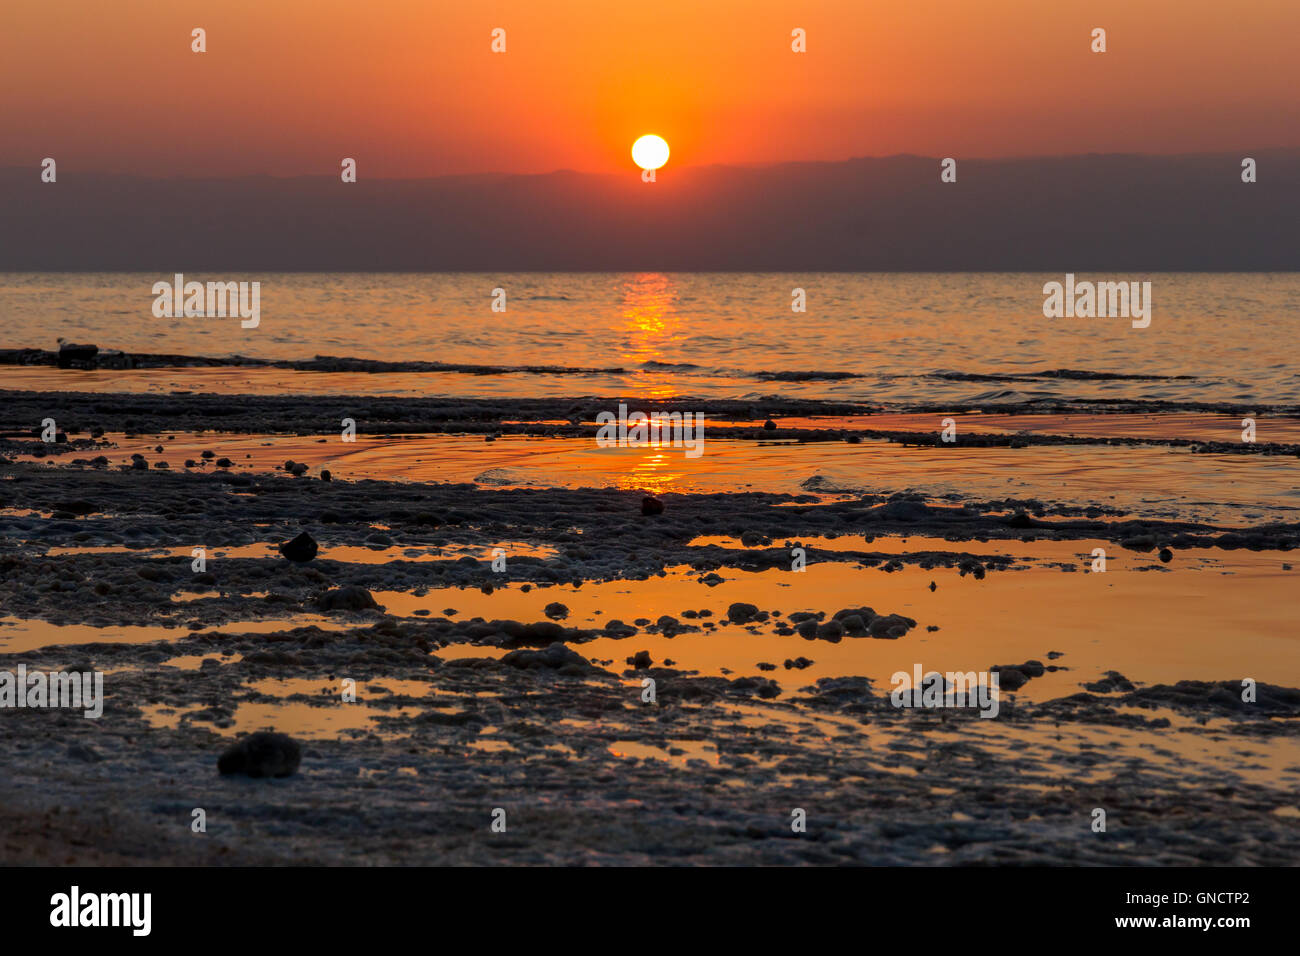 Sunset over the Dead Sea in Jordan Stock Photo - Alamy